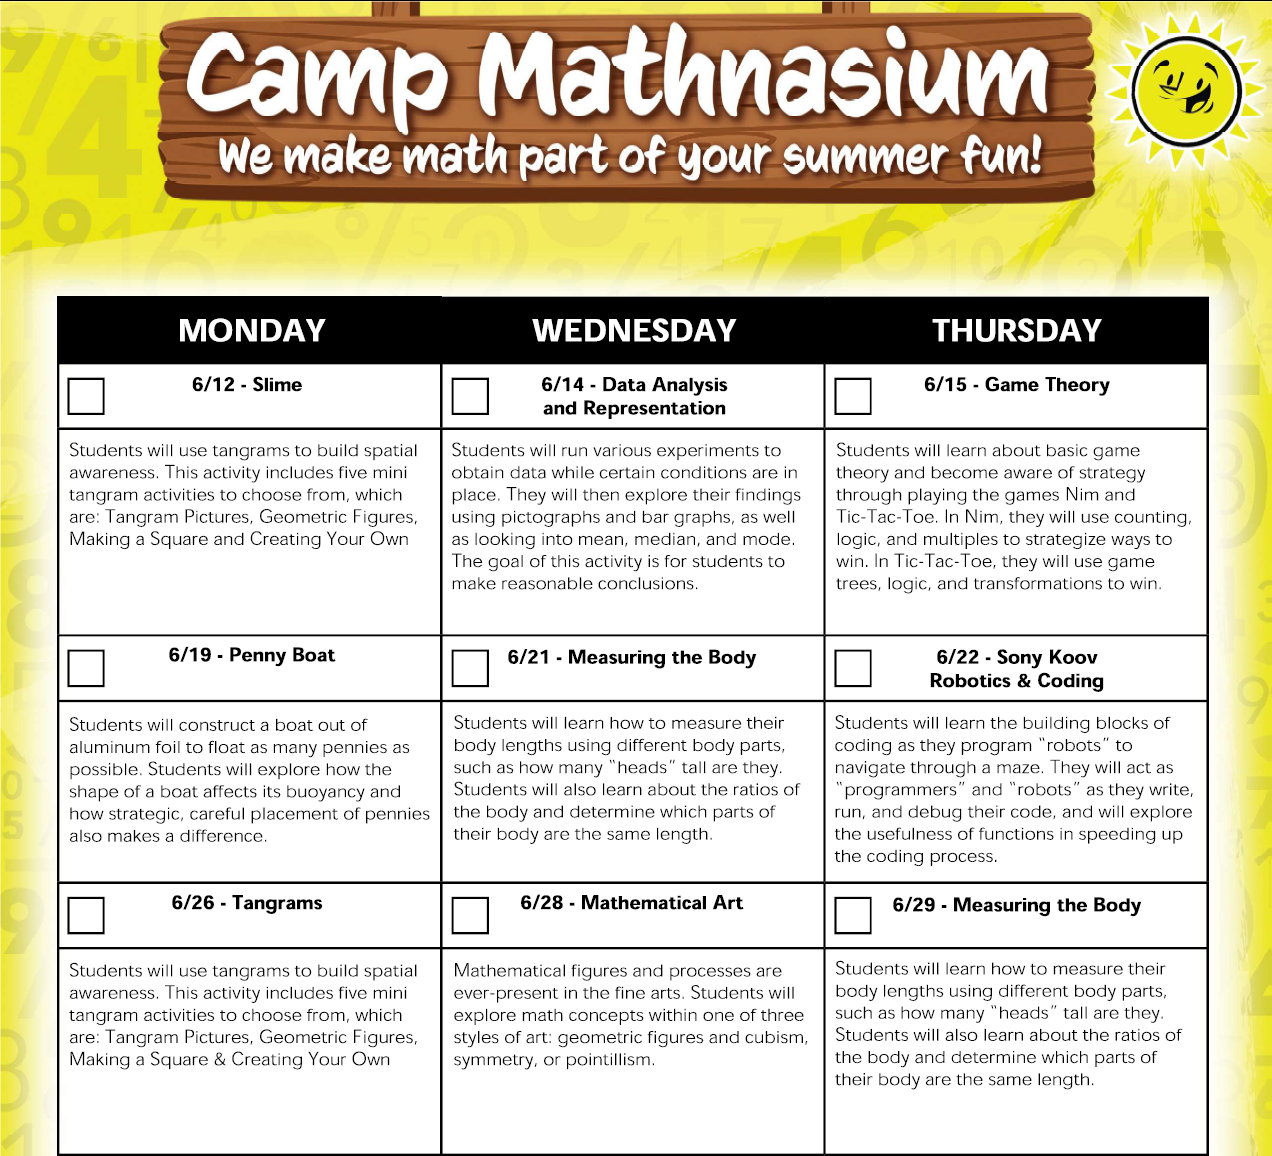 Camp Mathnasium STEAM Activities